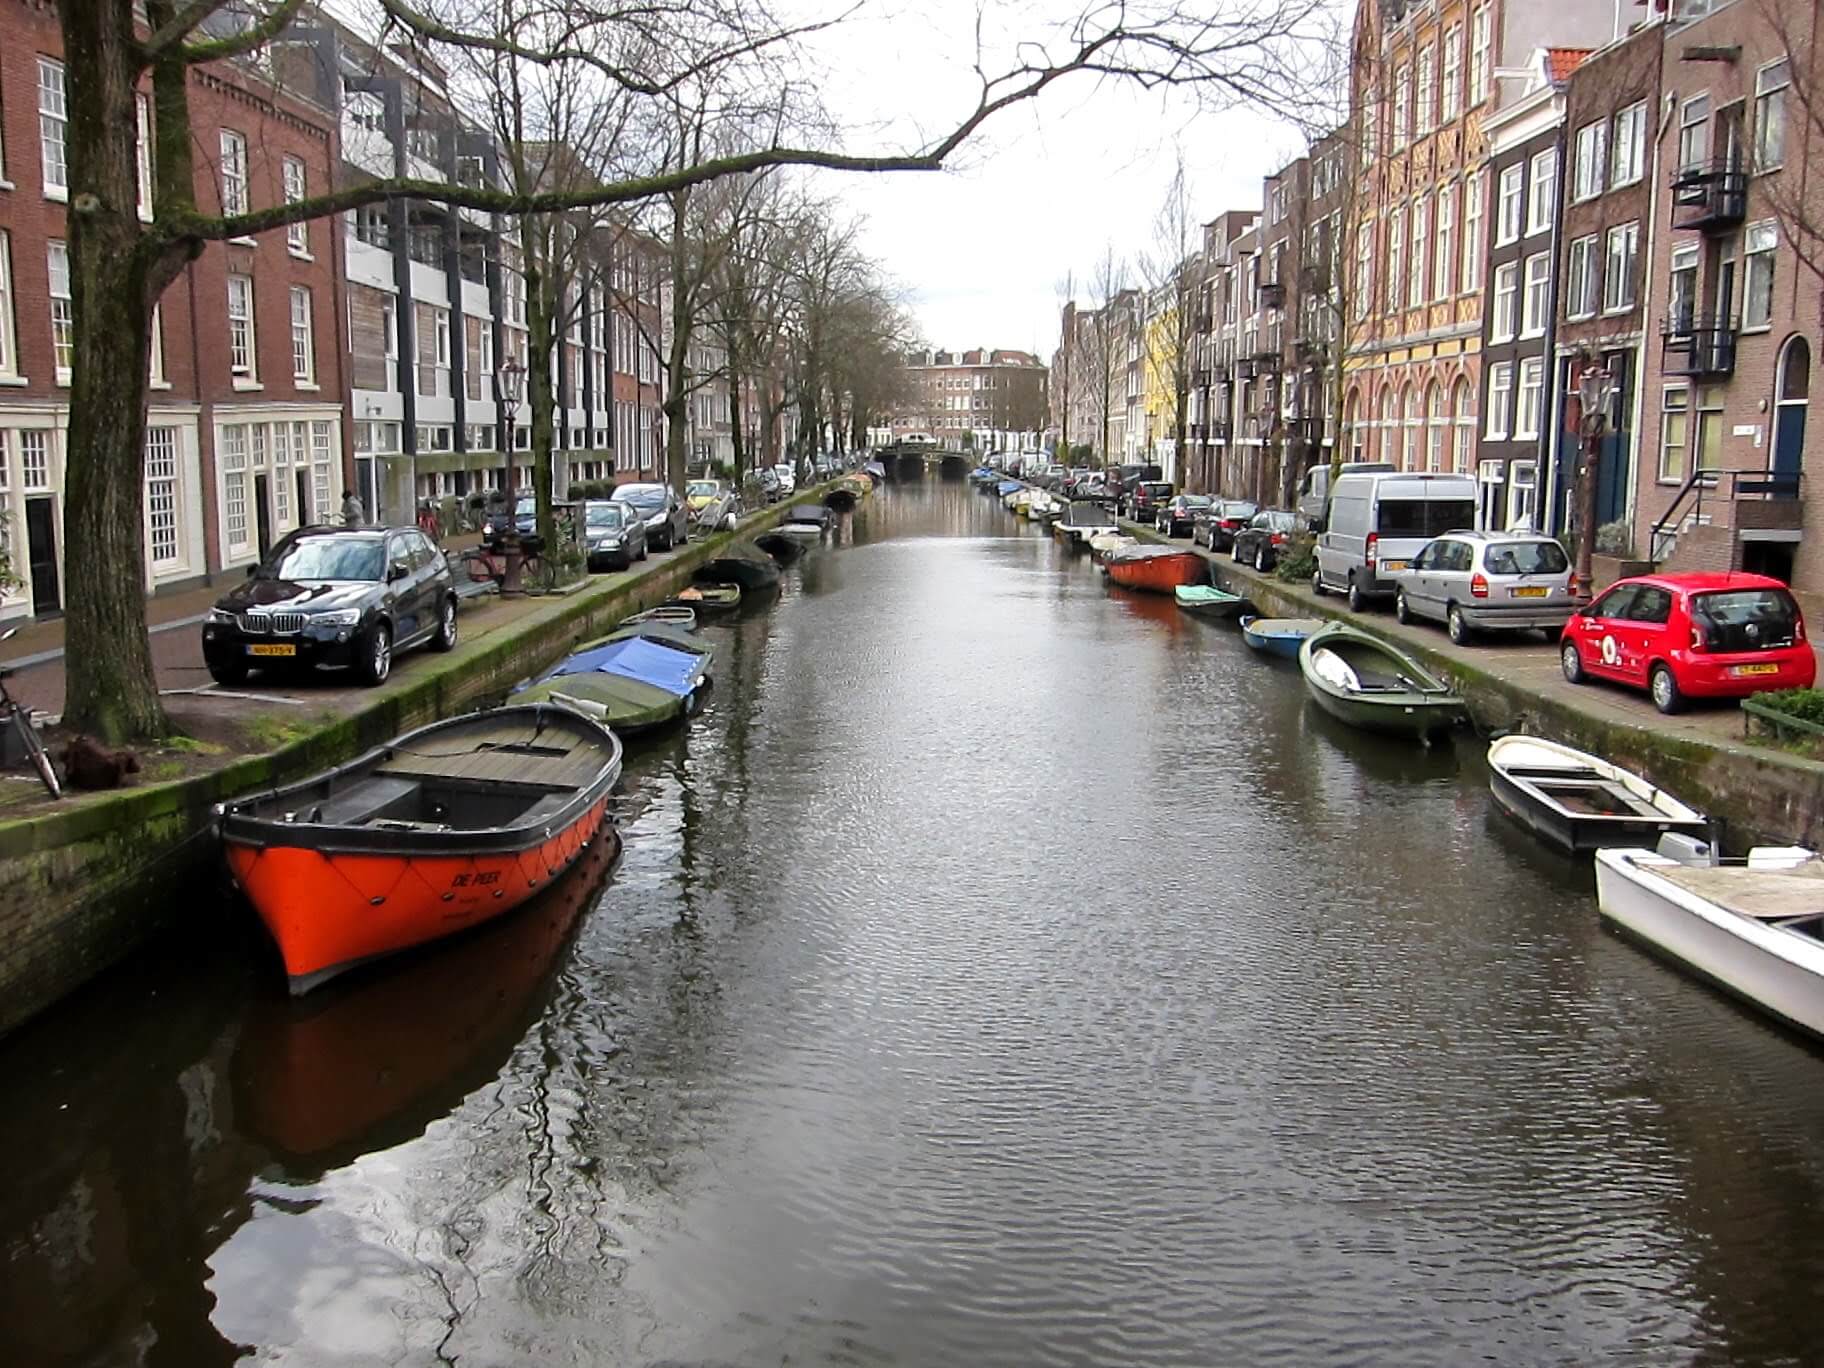 boats-along-canal.jpg